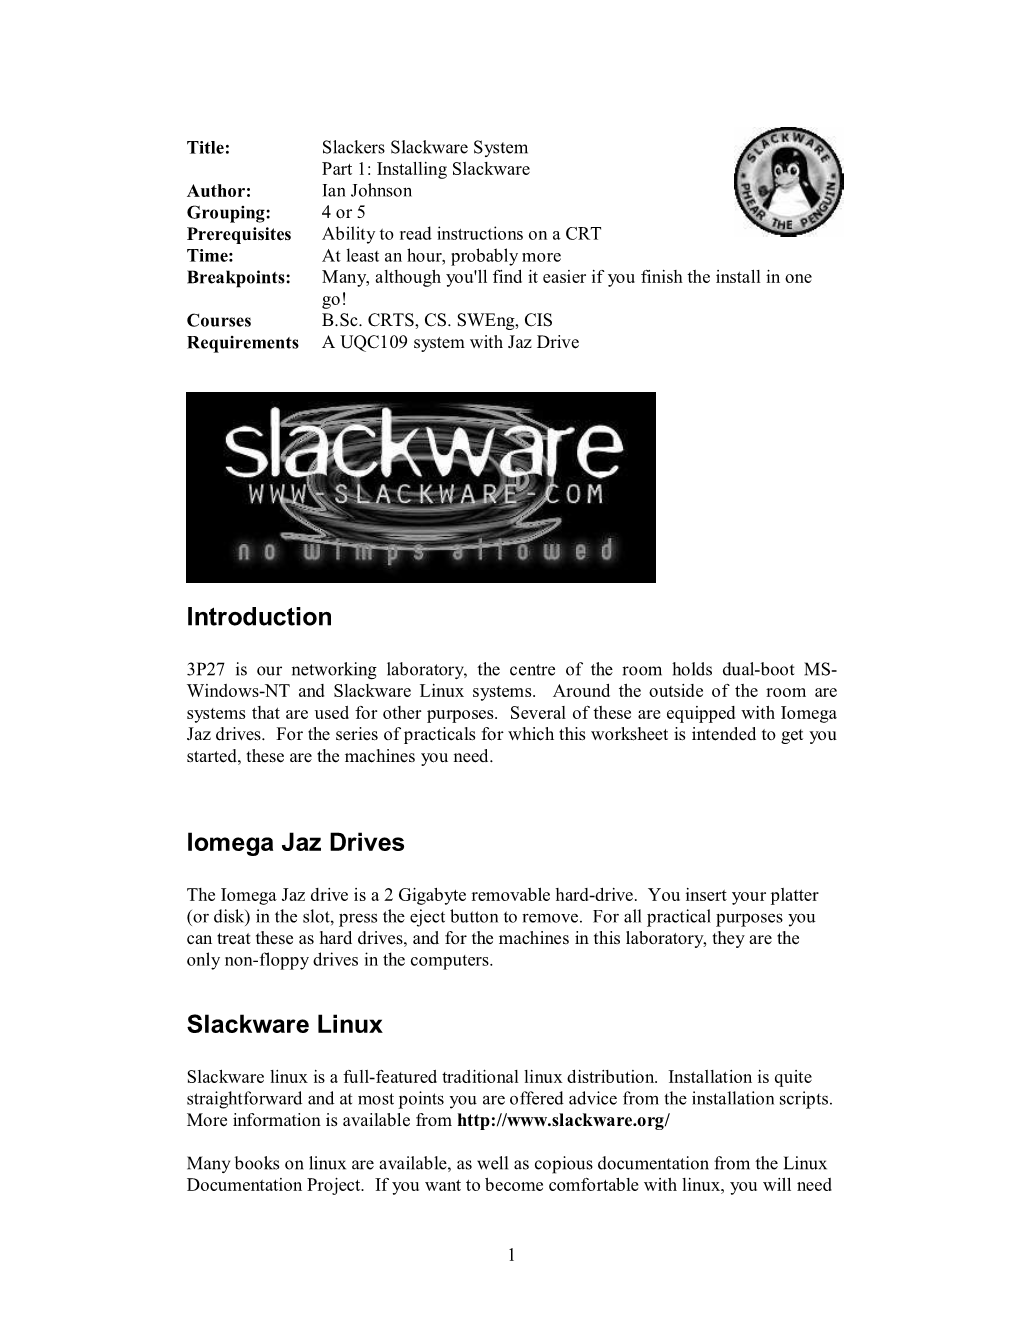 Slackware Linux Systems